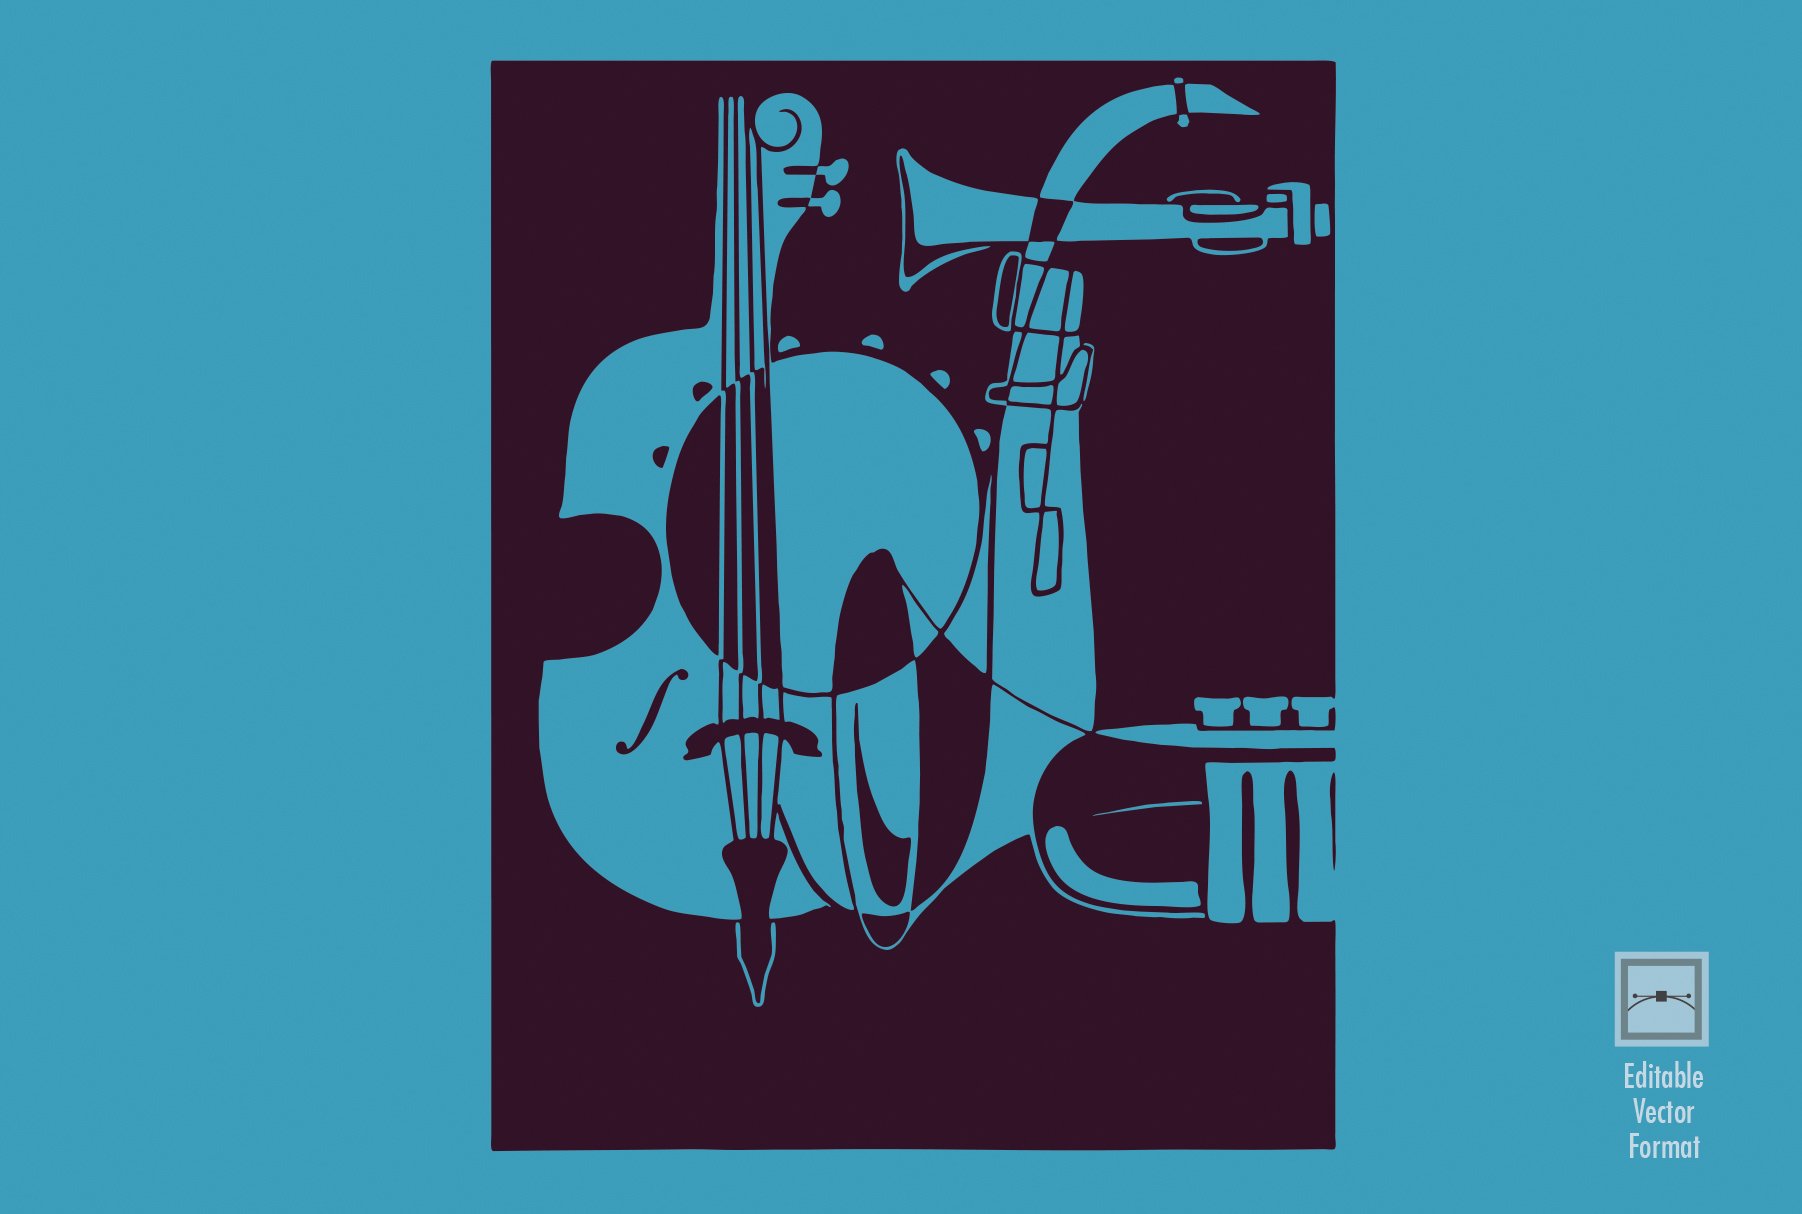 Mid-Century Jazz Art (vector) cover image.